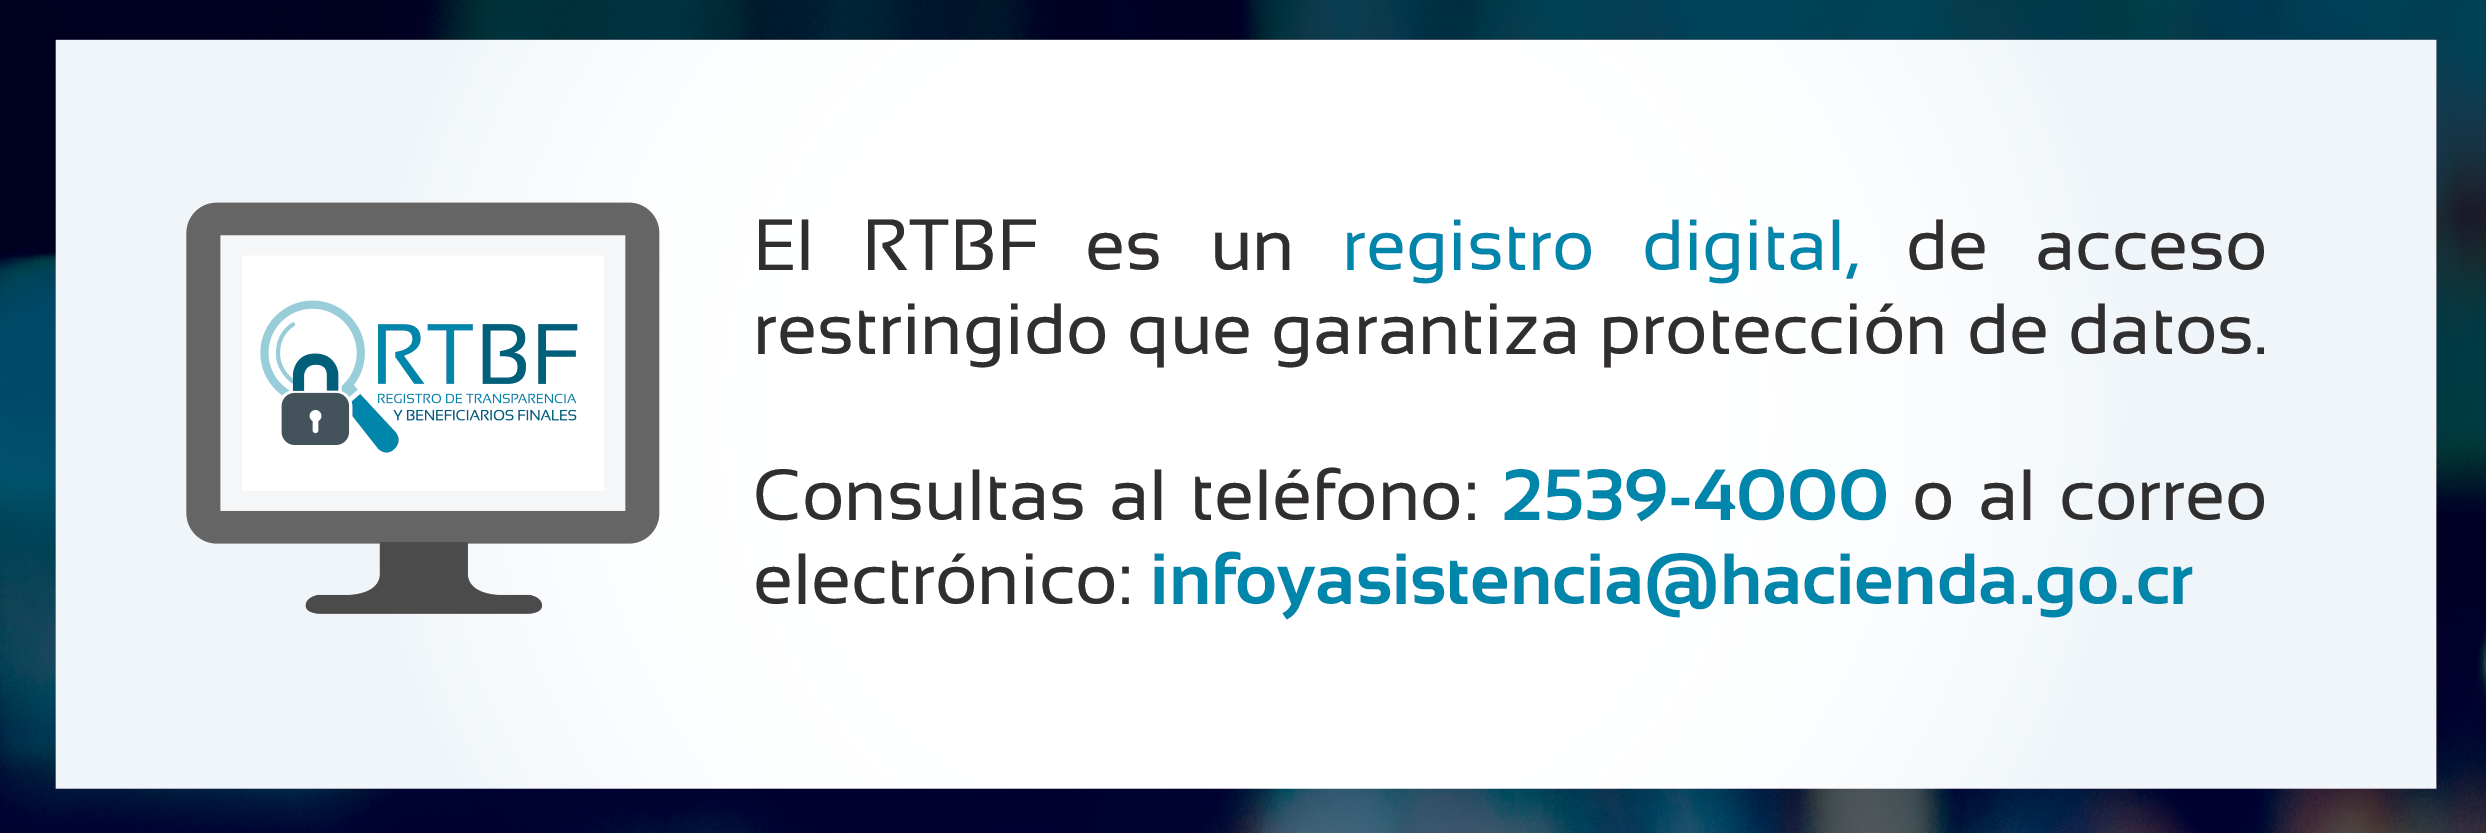 Consultas RTBF teléfono: 2539-4000, correo: infoyasistencia@hacienda.go.cr